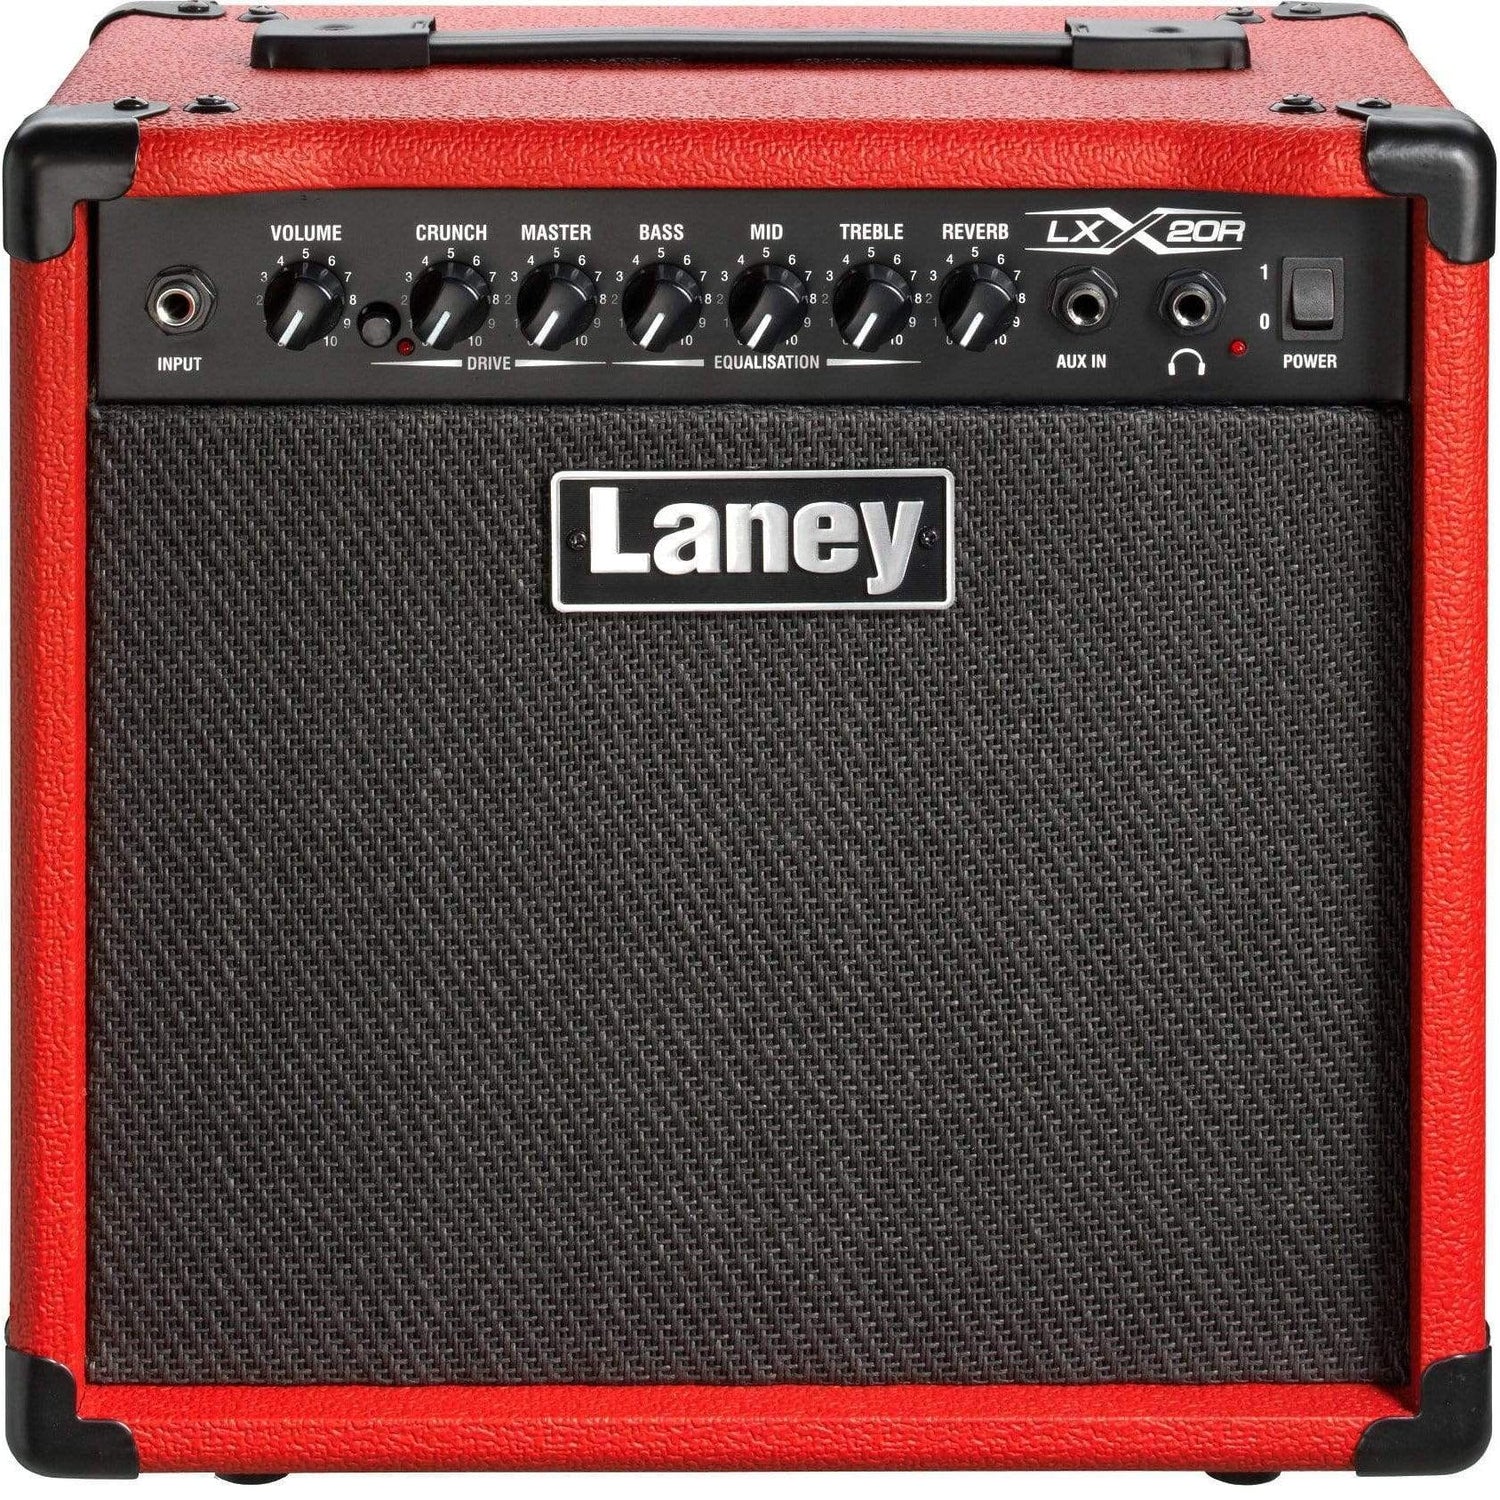 Laney LX20R Red Guitar Amplifier